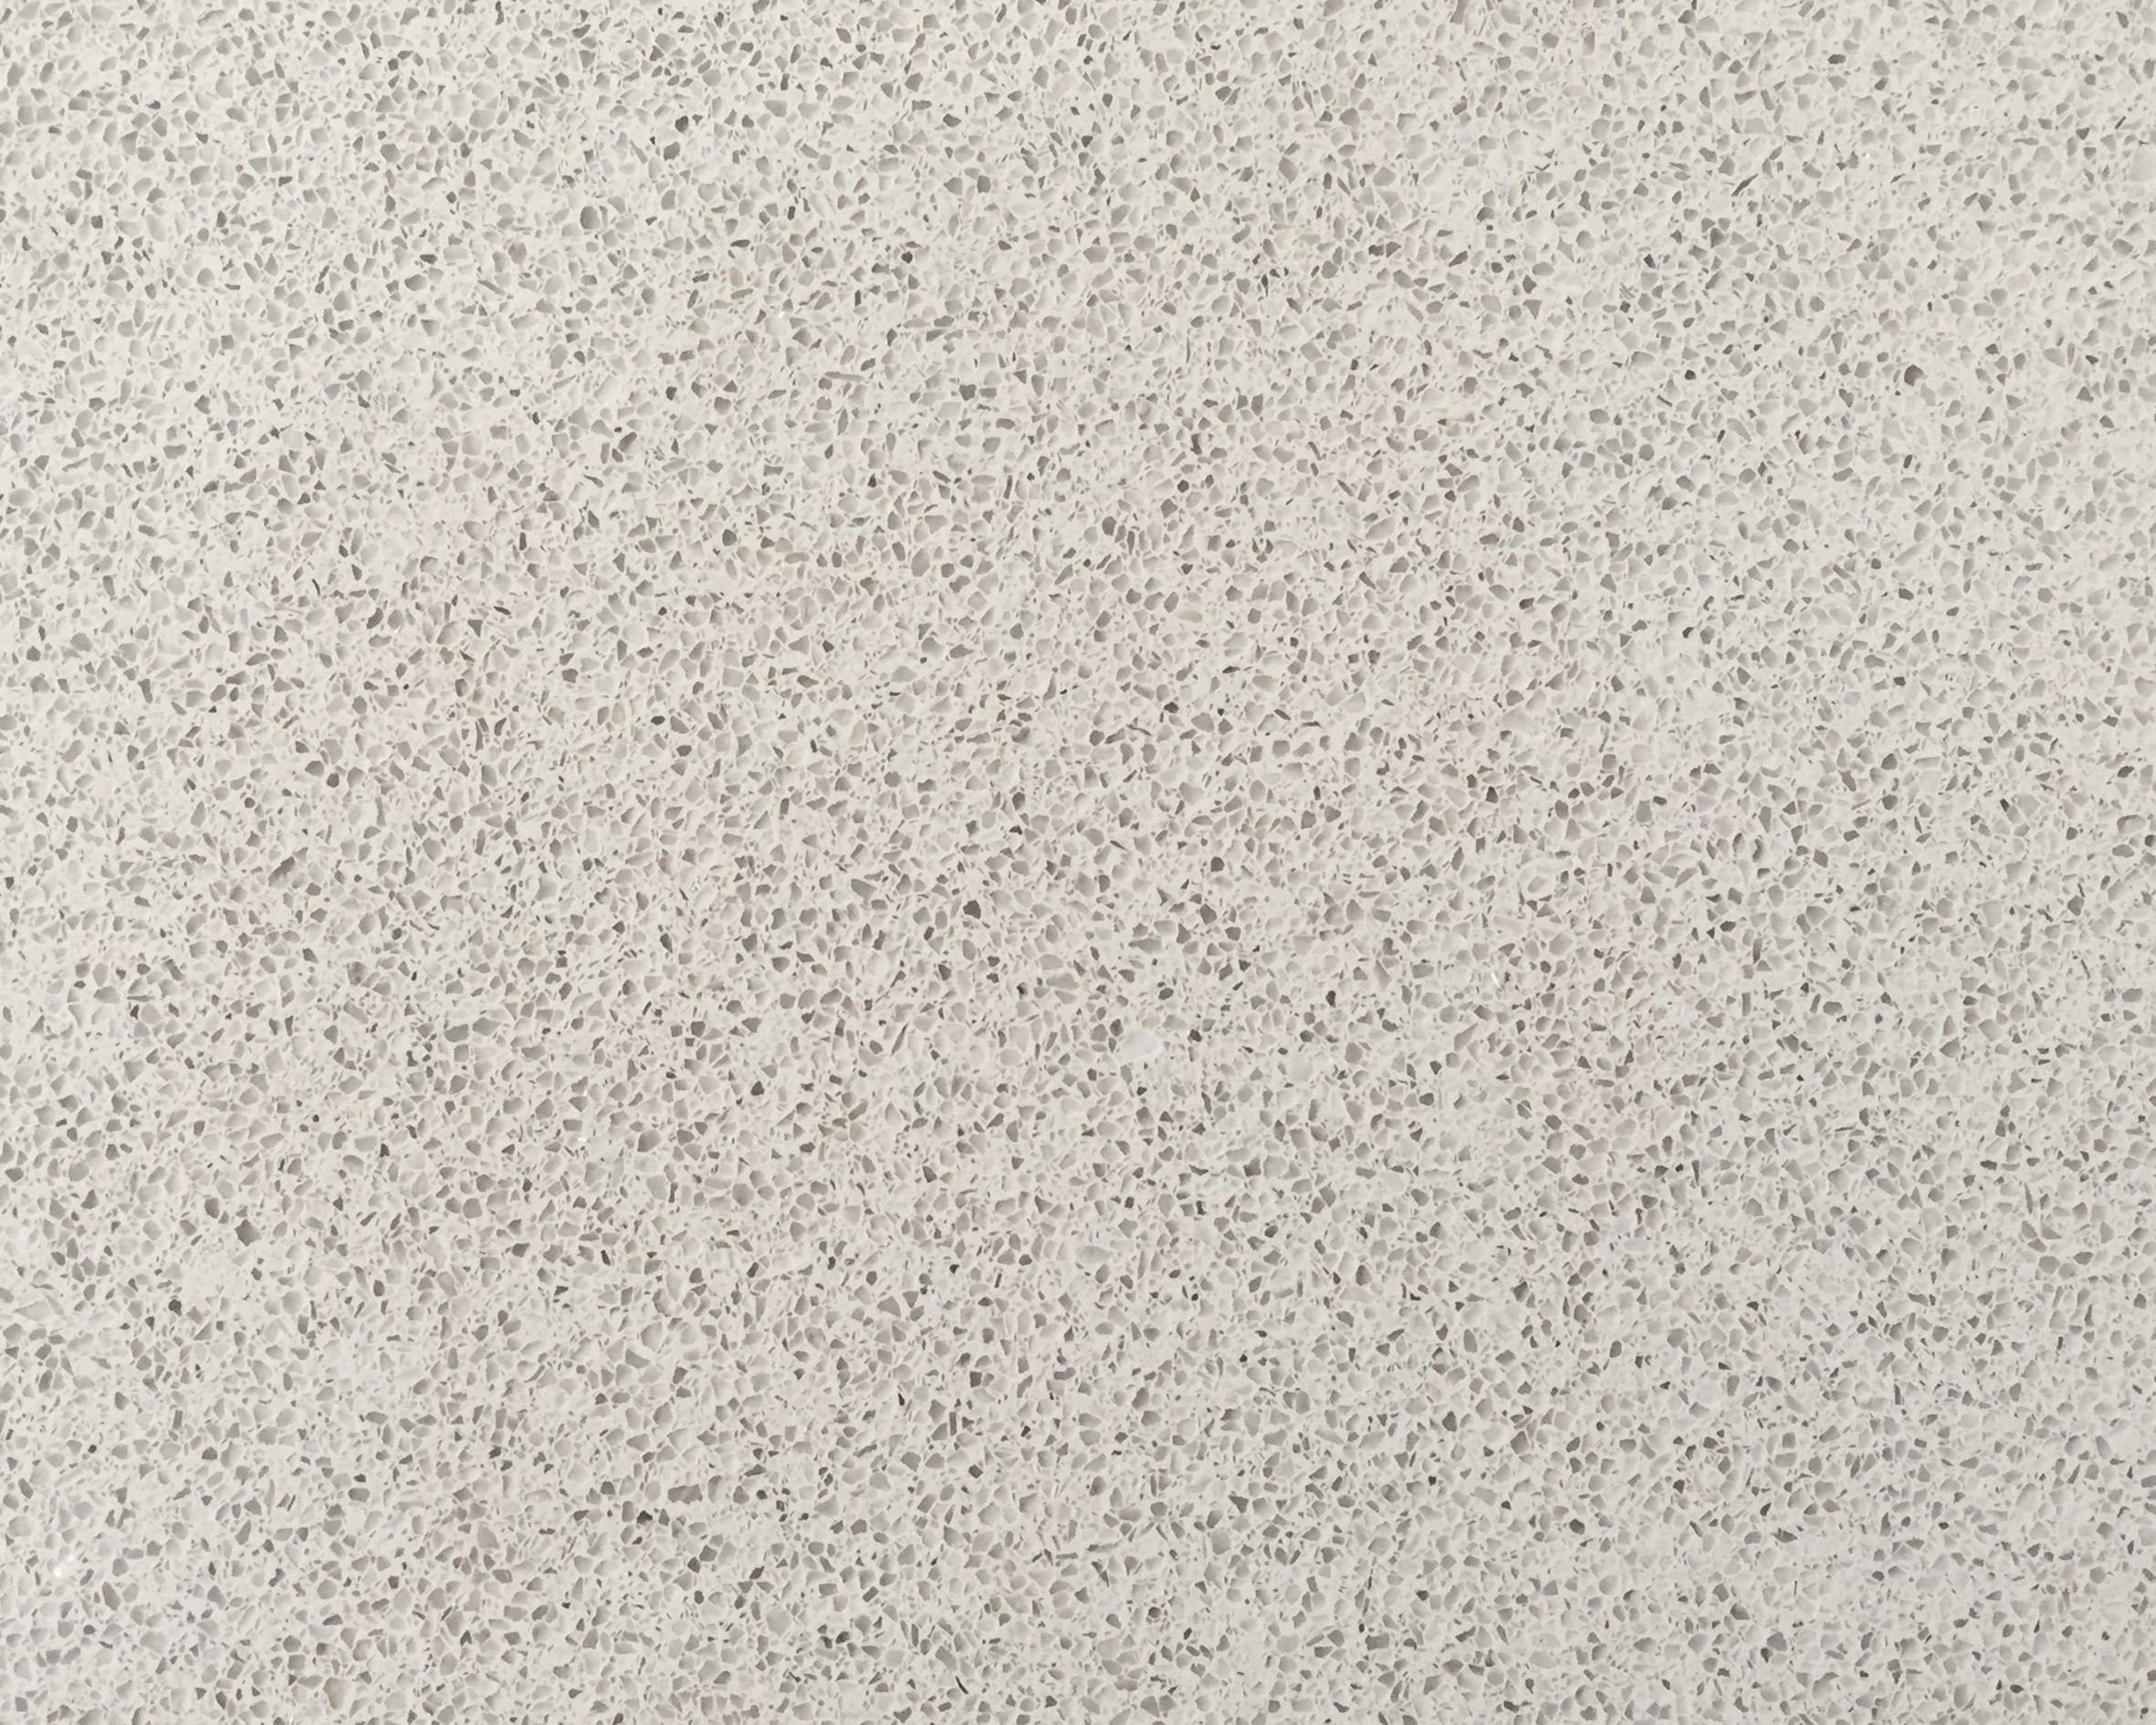 DL-AS-12301 Classical Sand Grey Quartz Slab Anti-Skidding